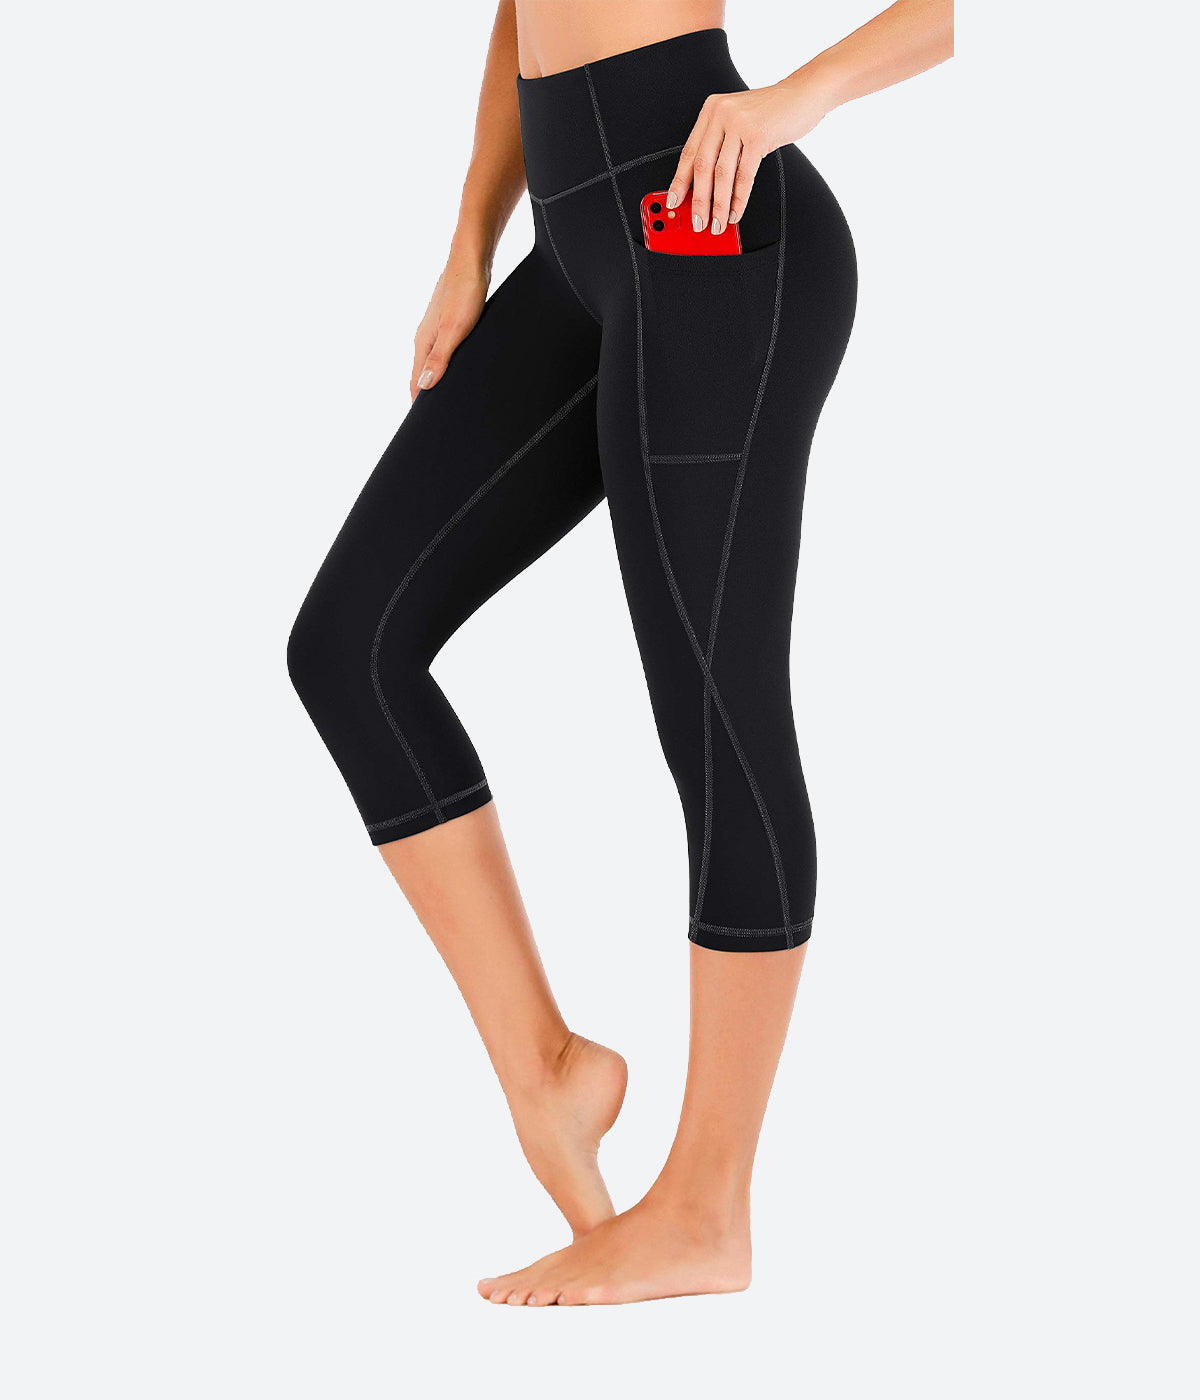 1 pcs High Waisted Yoga Pants Women's Workout Capris Leggings with Pockets